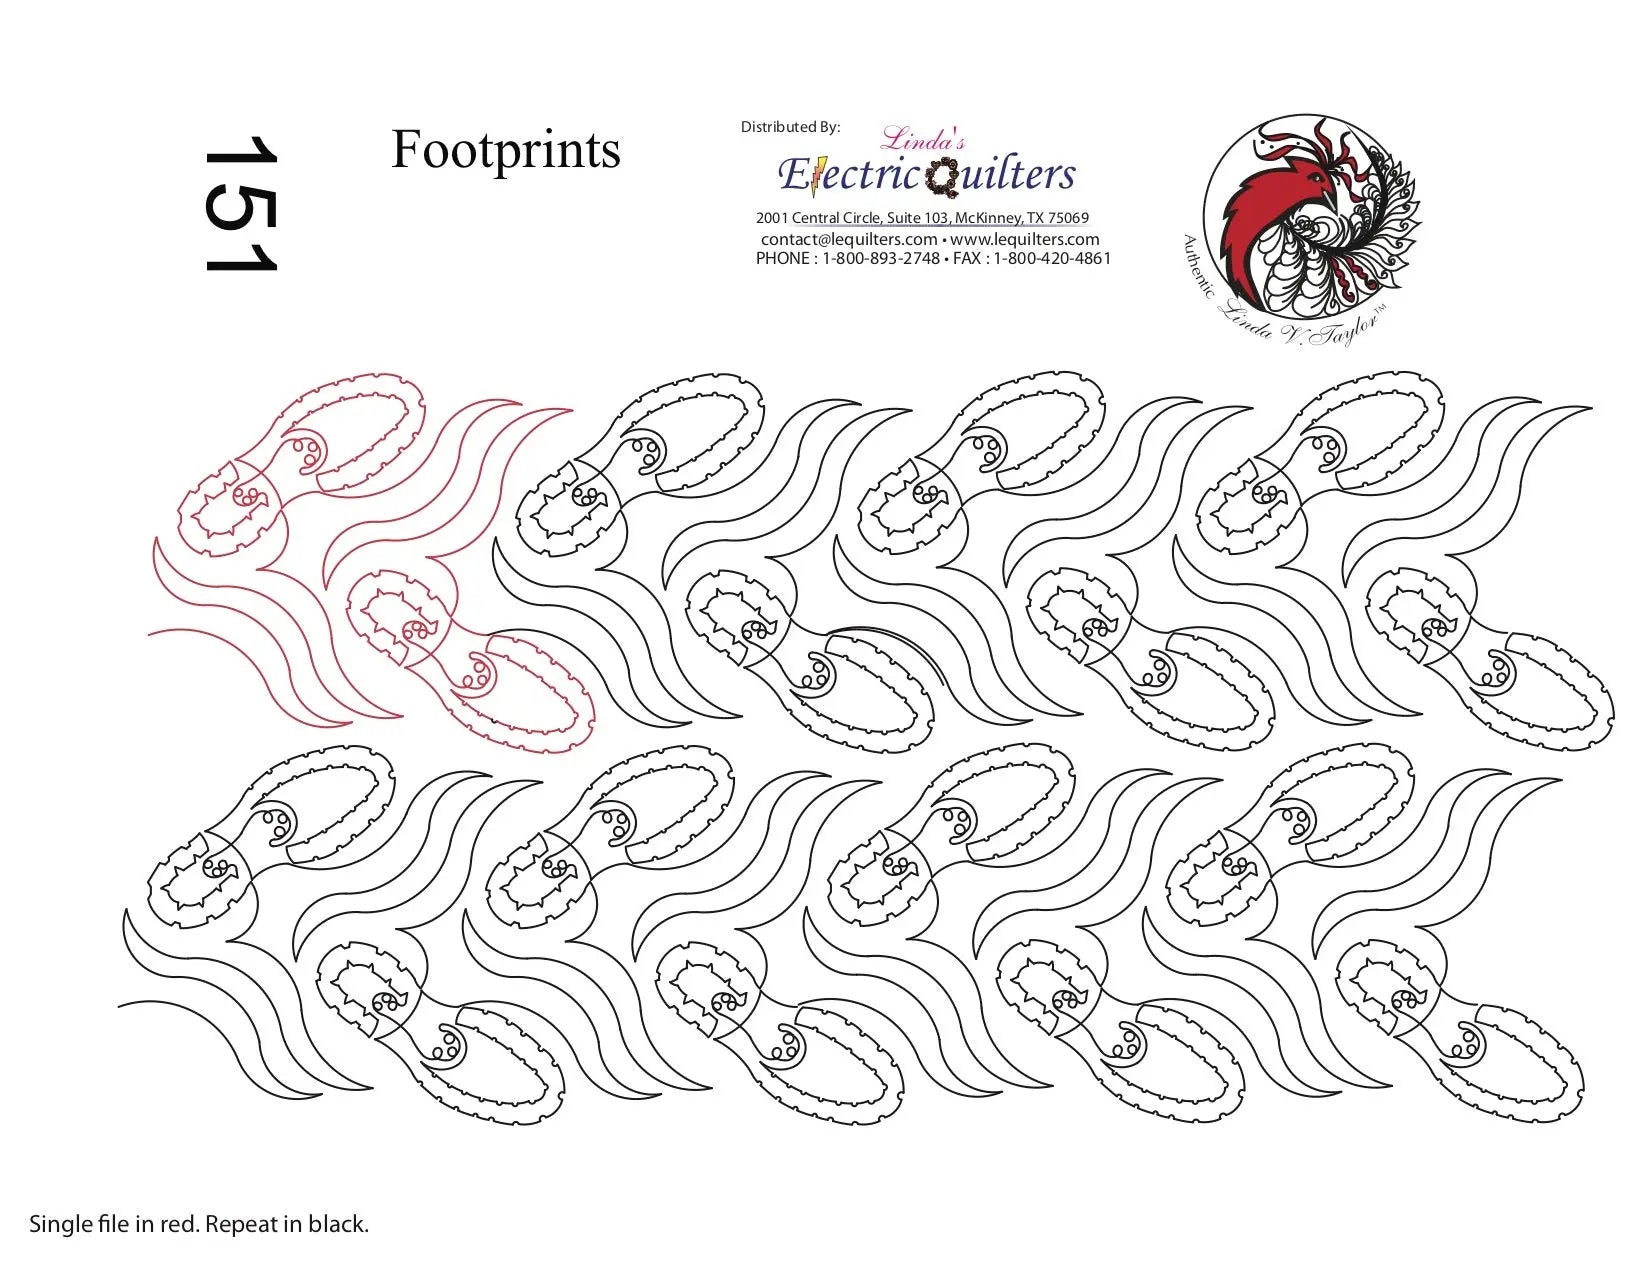 151 Footprints Pantograph by Linda V. Taylor - Linda's Electric Quilters